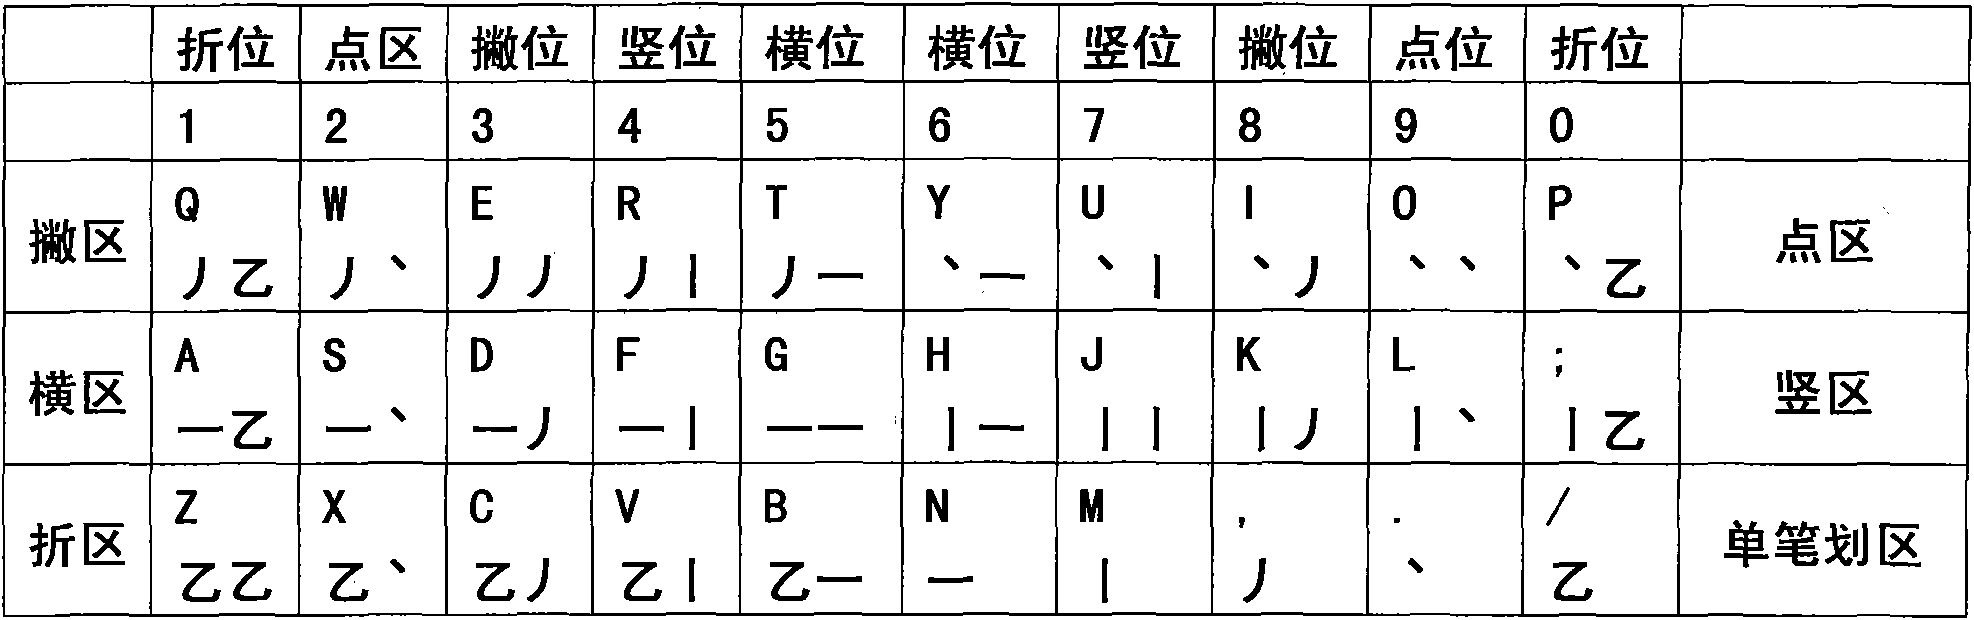 Twenty-five-radical Chinese-form code input method